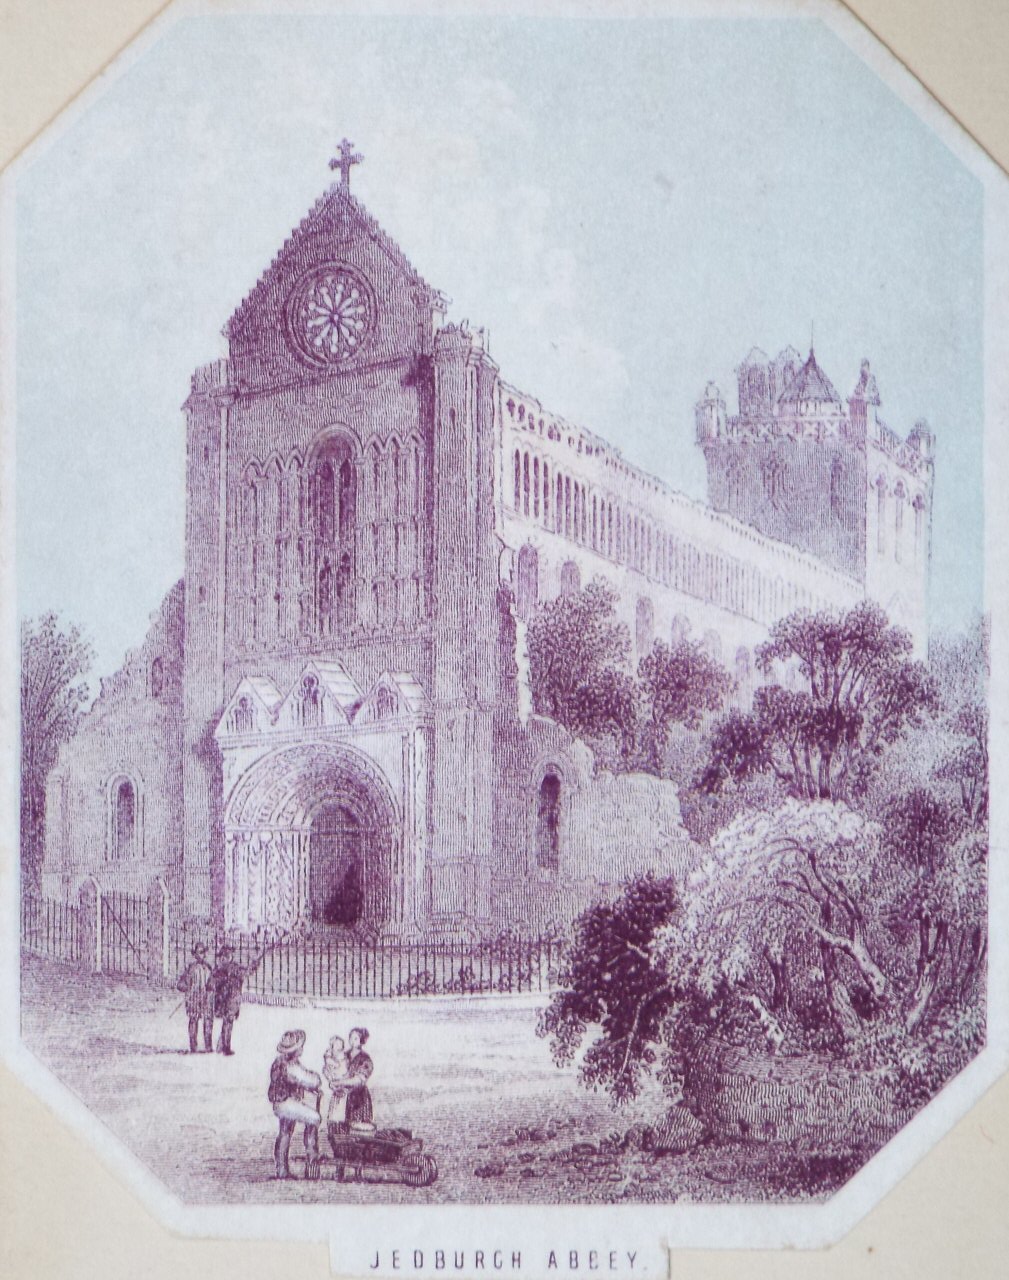 Chromo-lithograph - Jedburgh Abbey